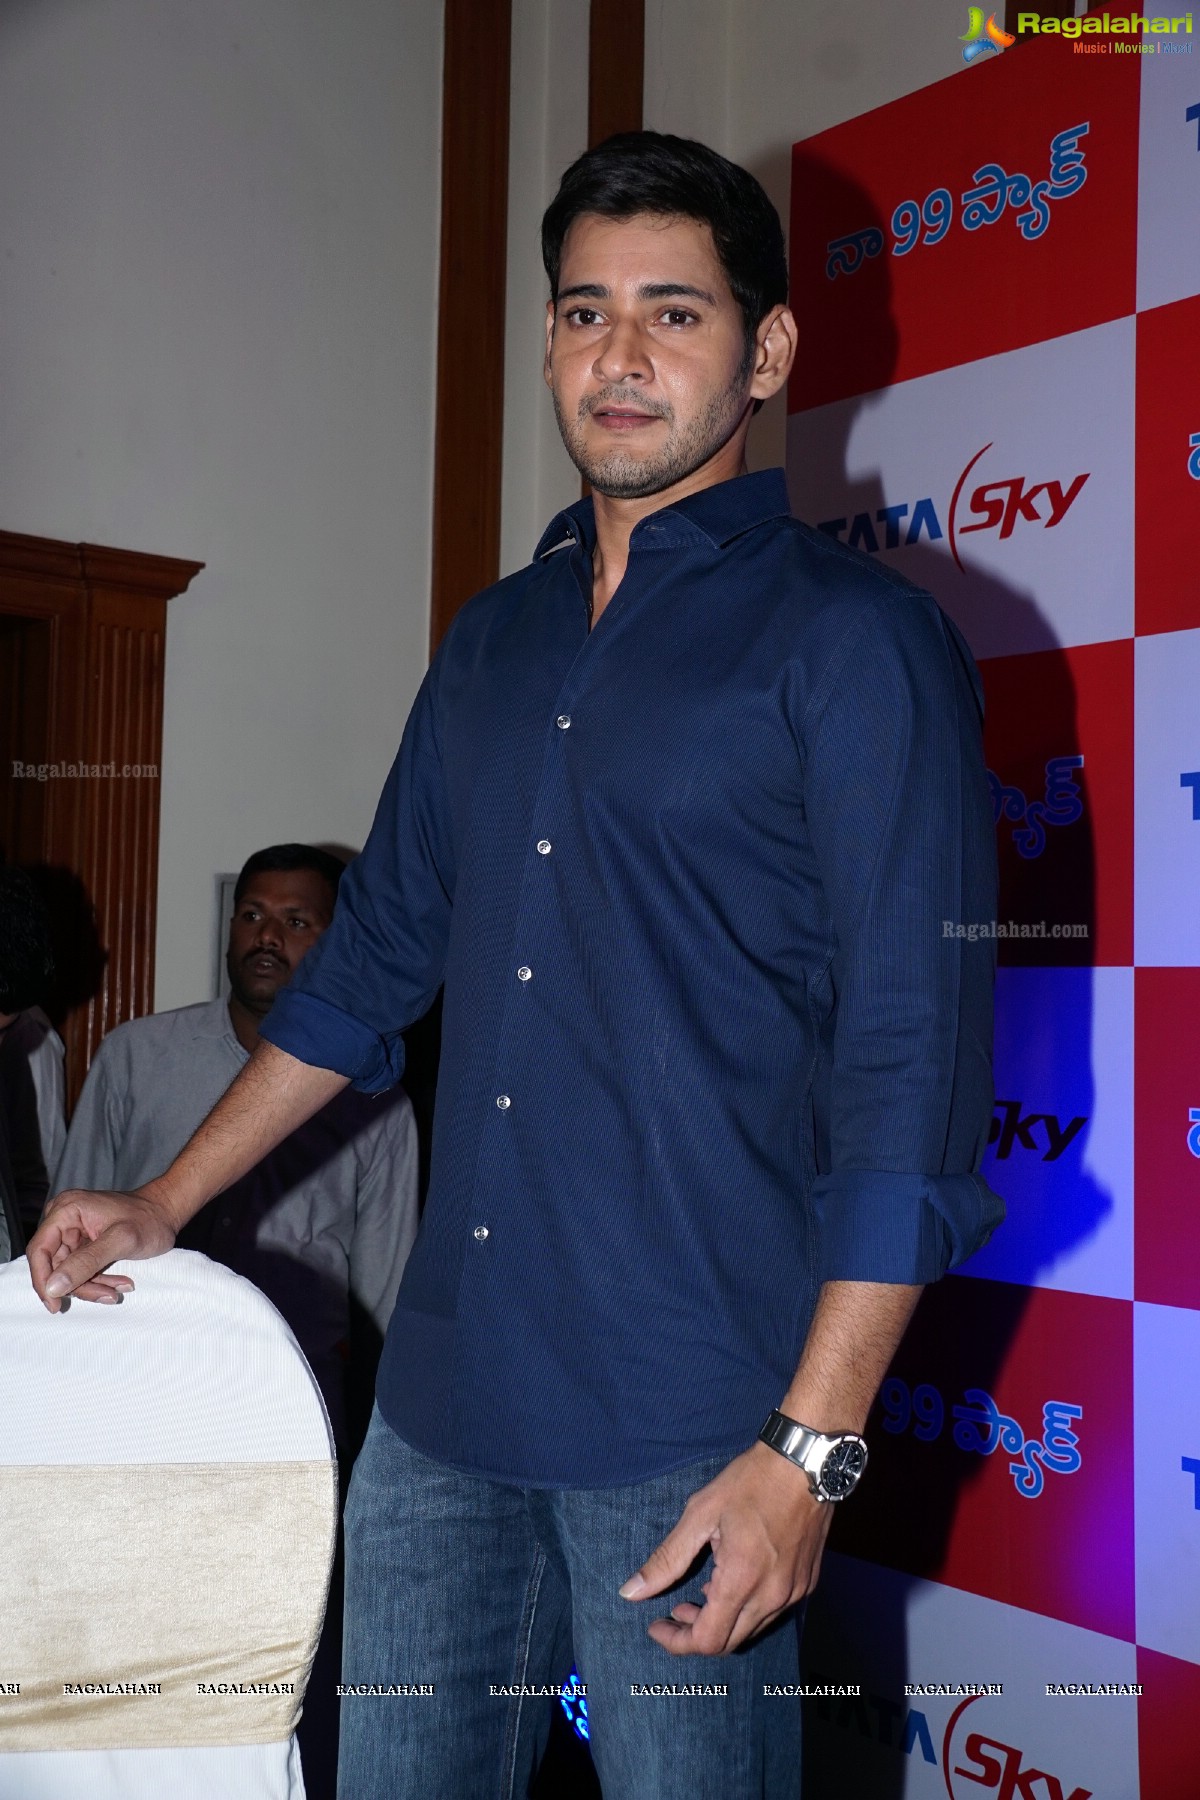 Superstar Mahesh Babu at Tata Sky Success Event